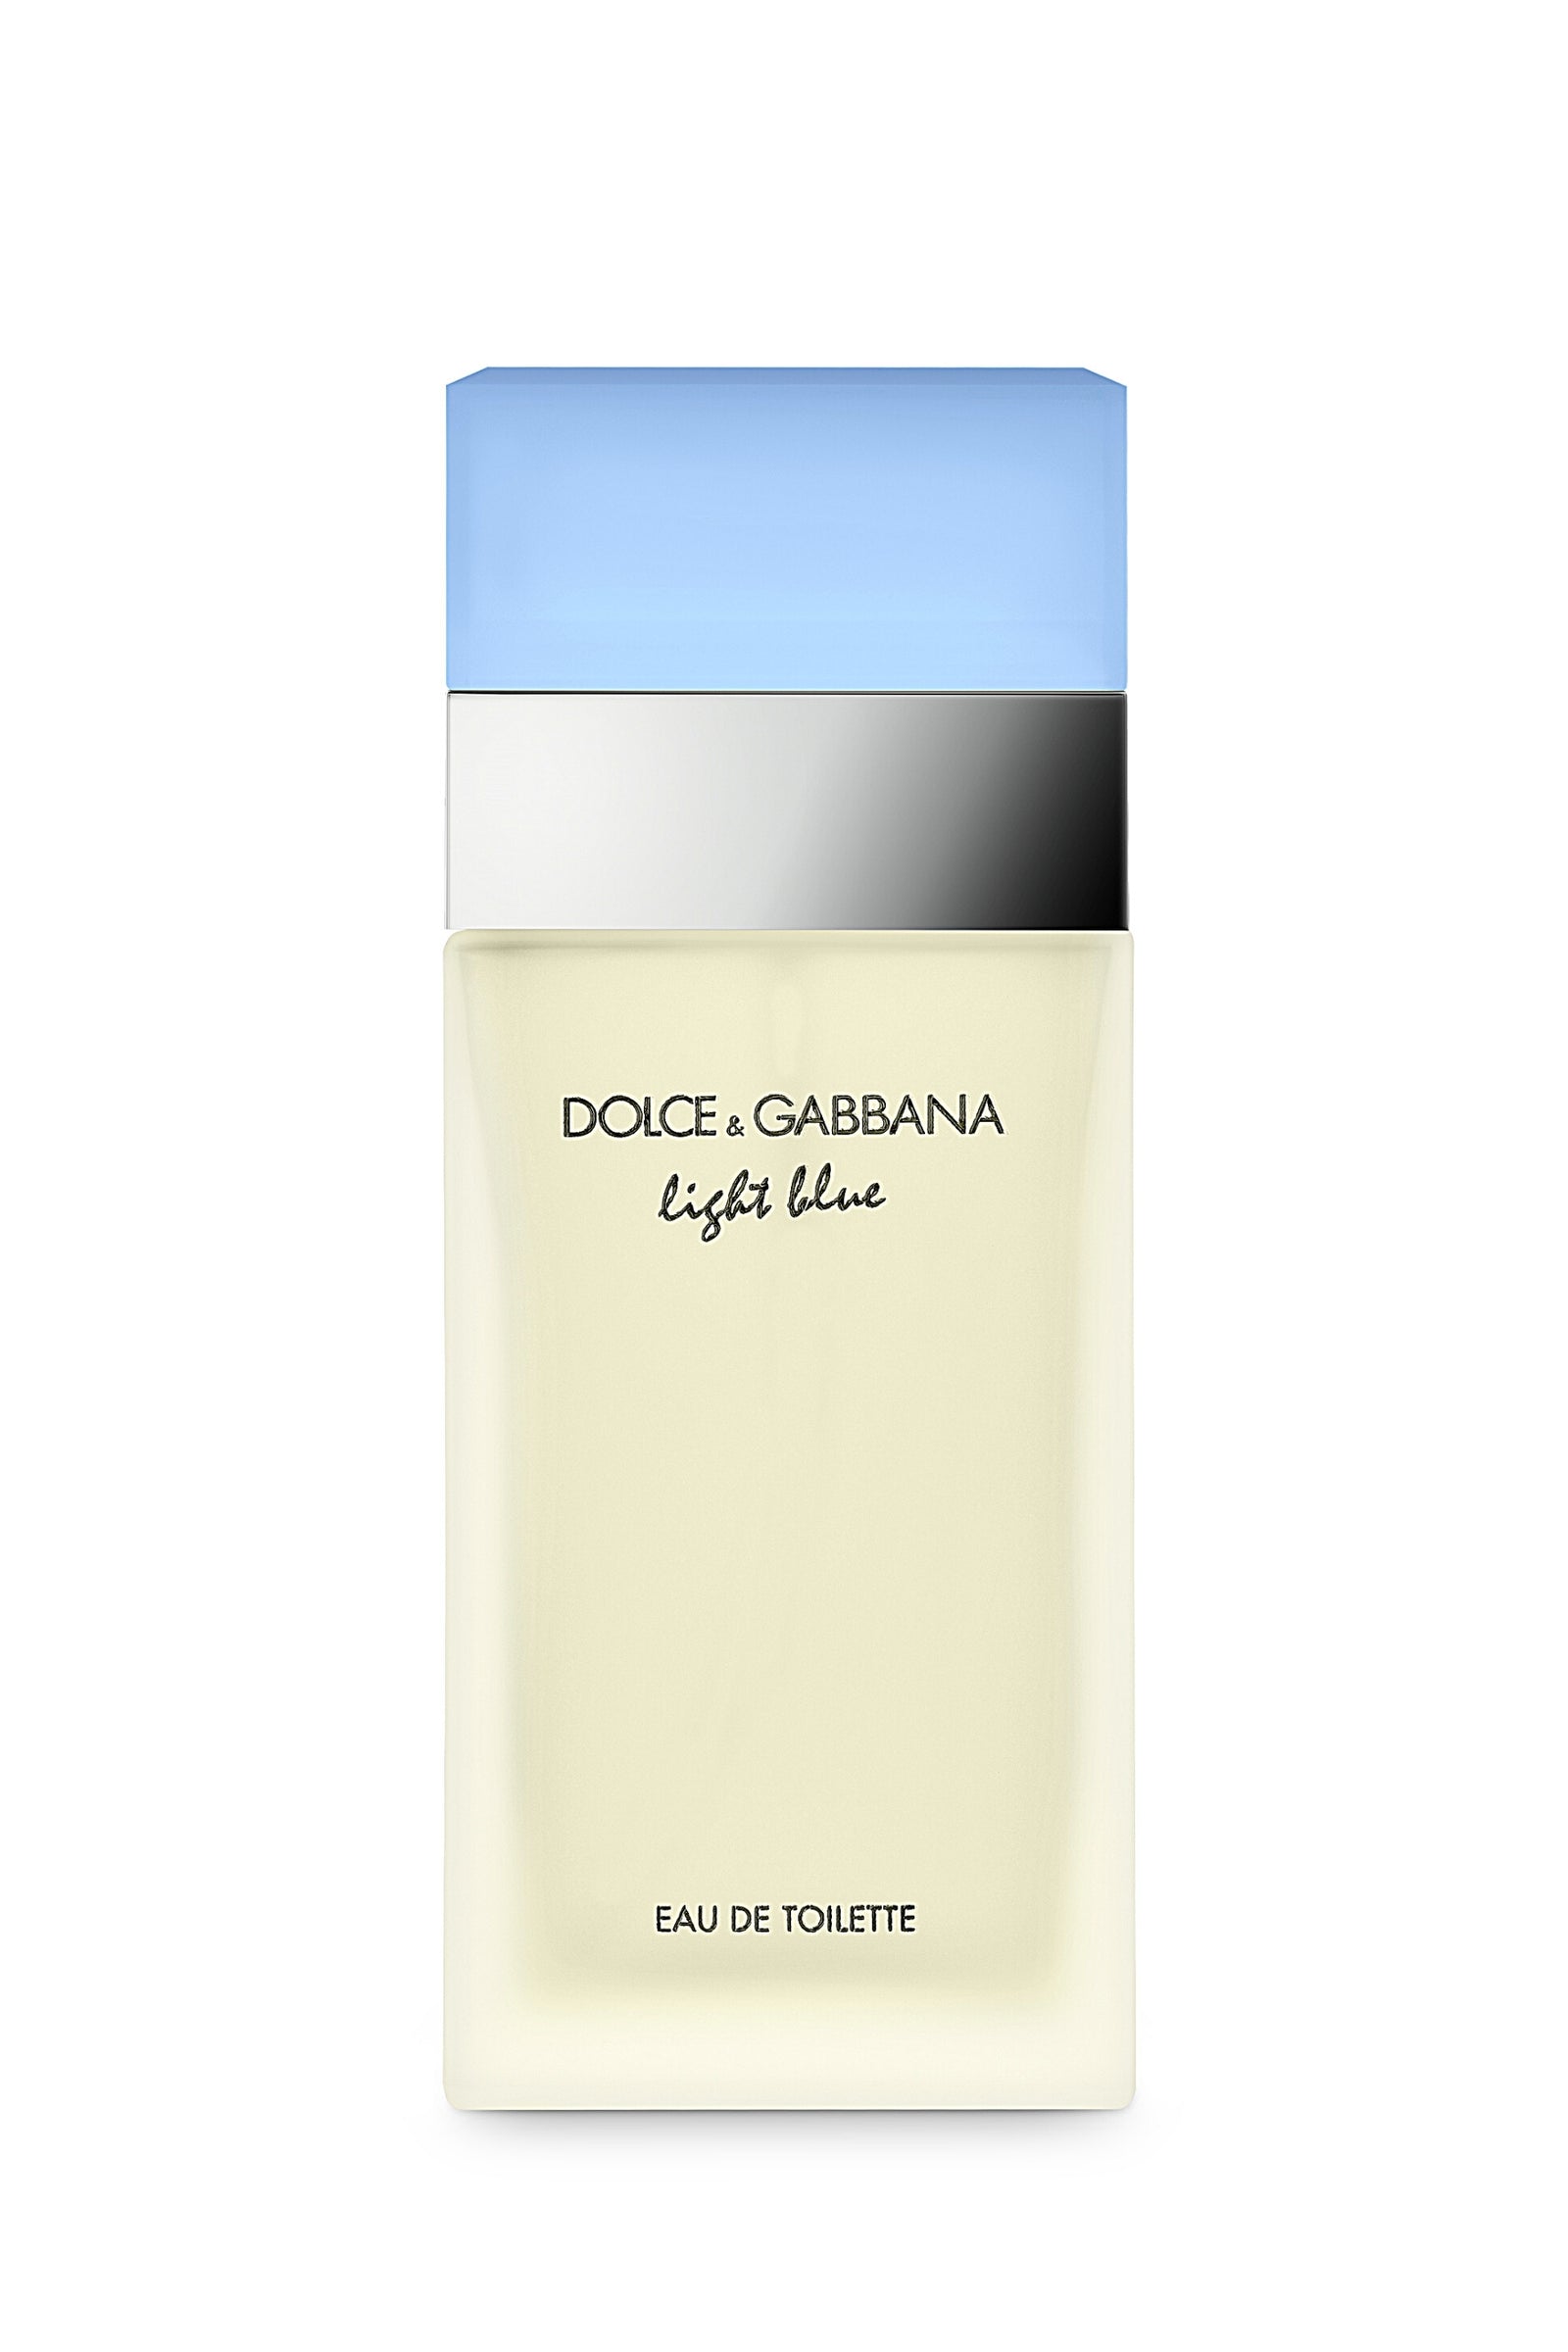 DOLCE & GABBANA 3 L'IMPERATRICE FOR WOMEN - EAU DE TOILETTE SPRAY, 3.3 –  Fragrance Room